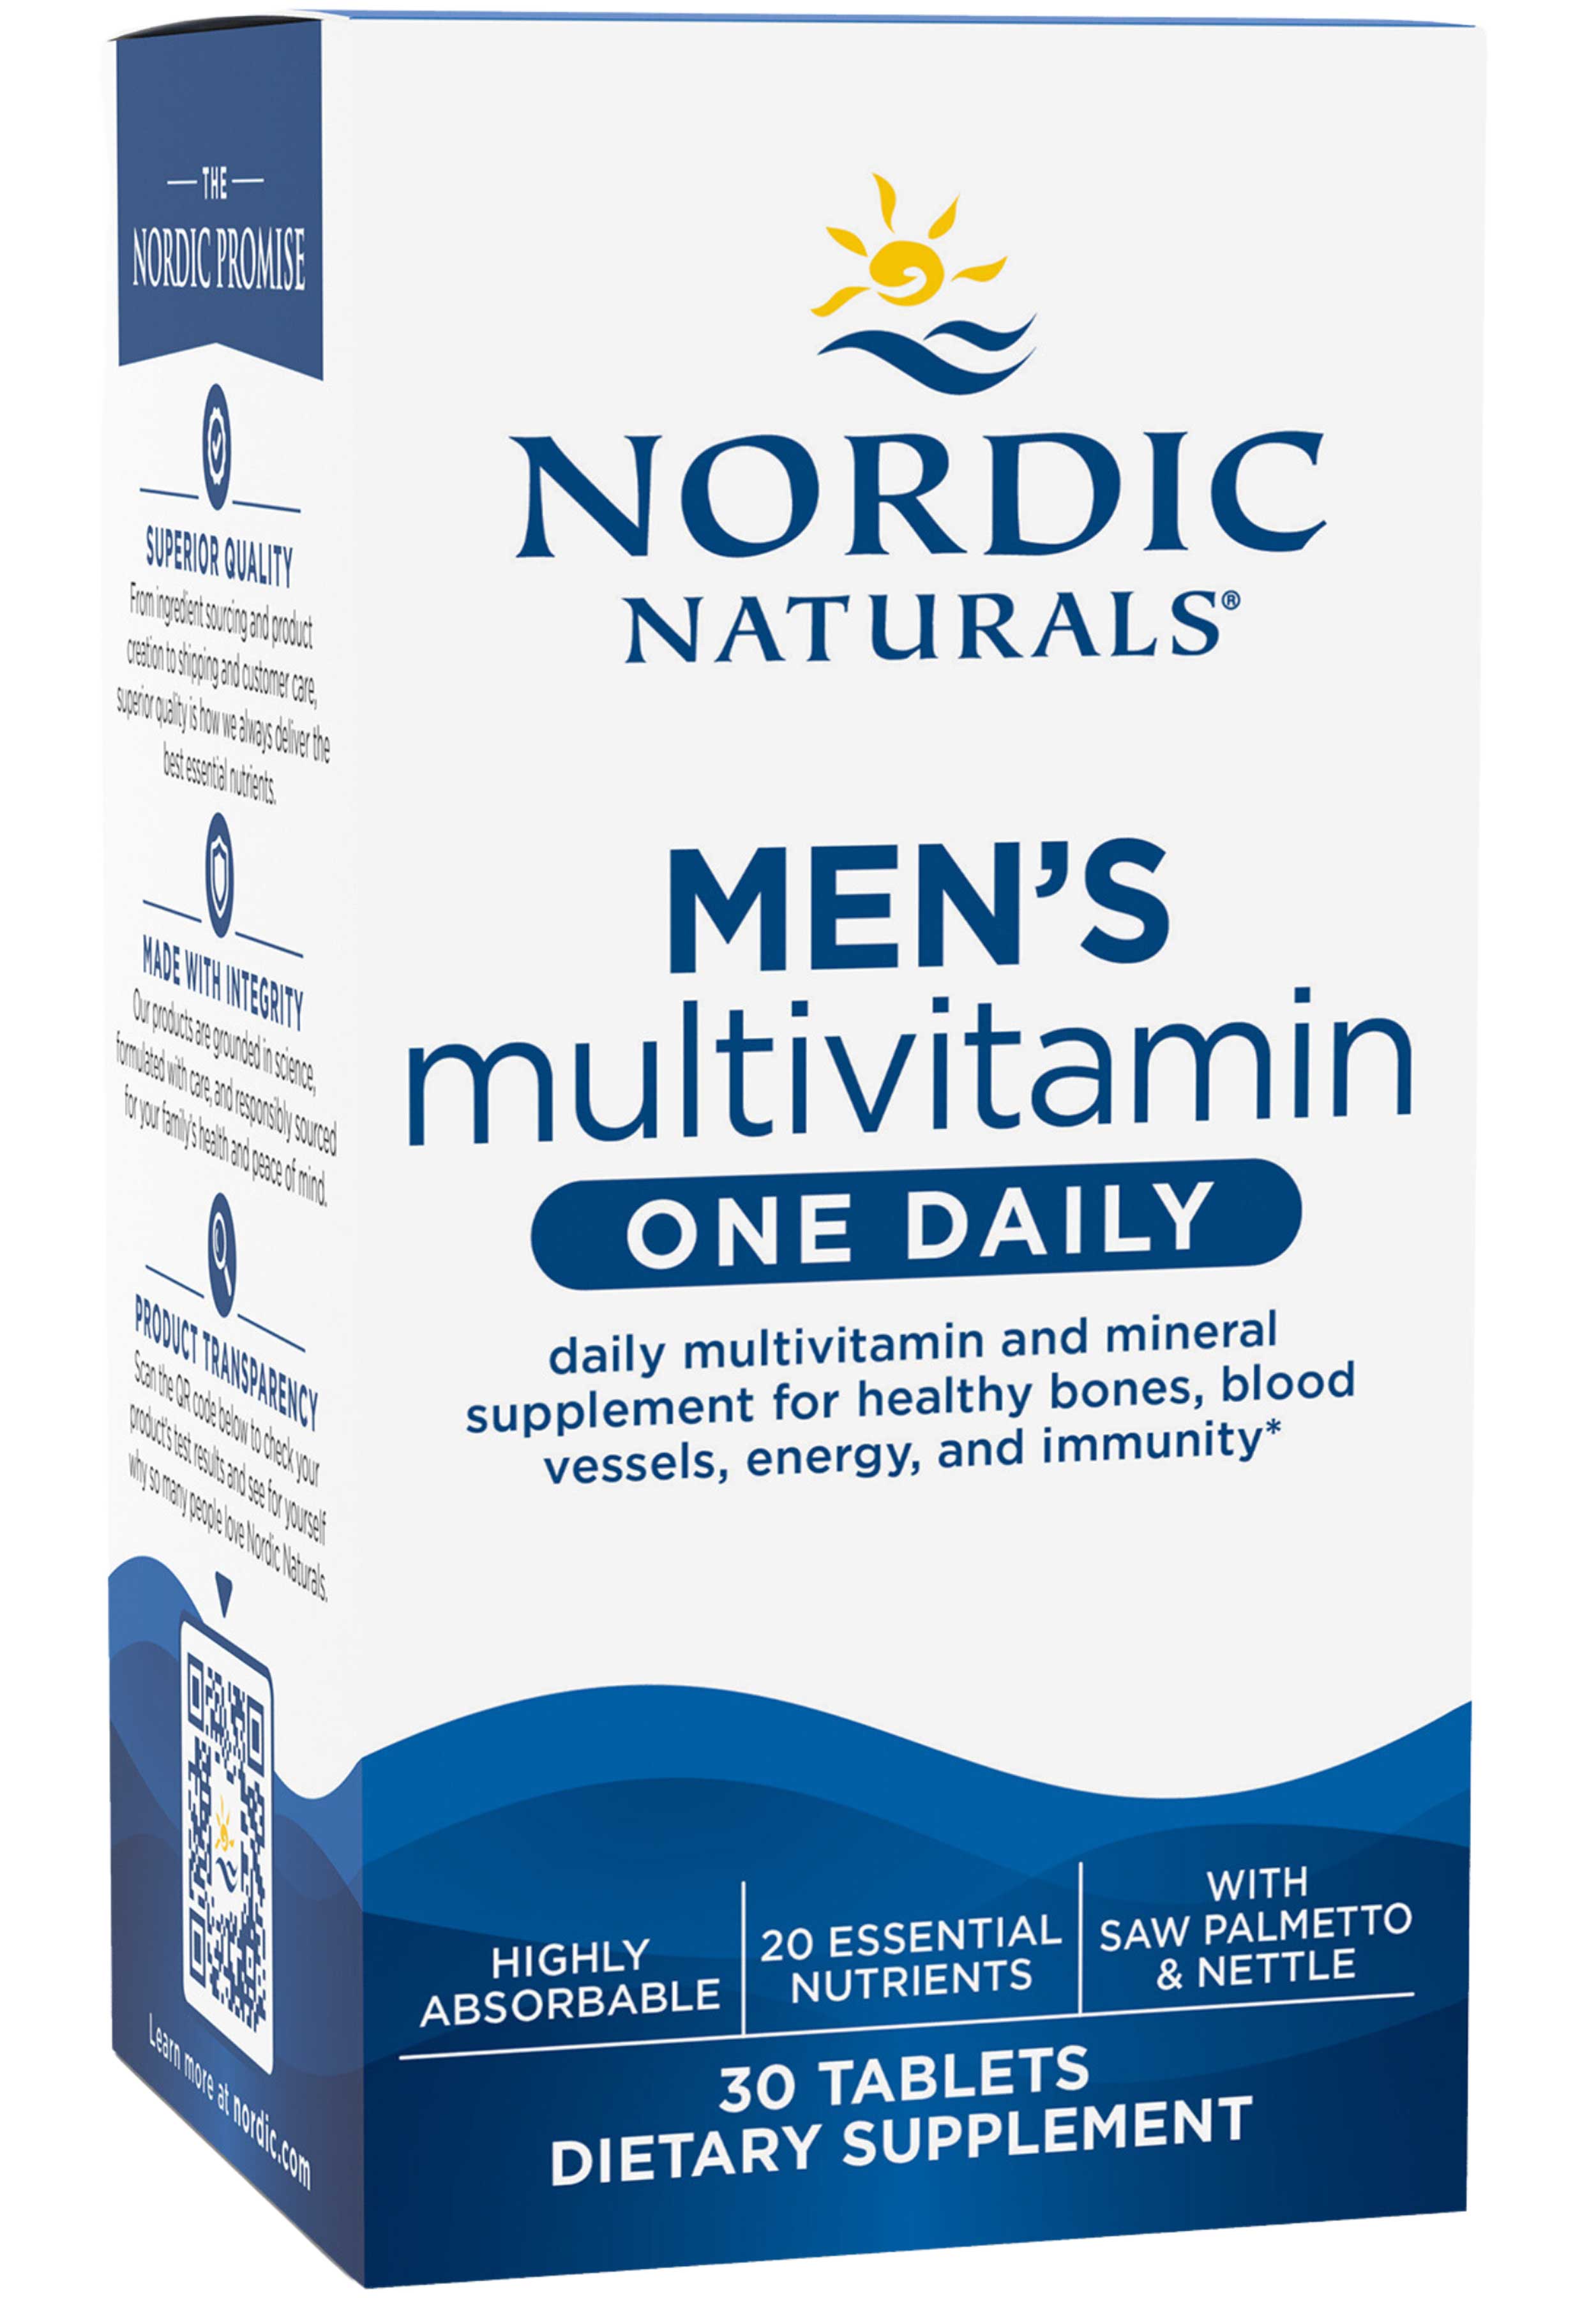 Nordic Naturals Men's Multivitamin One Daily